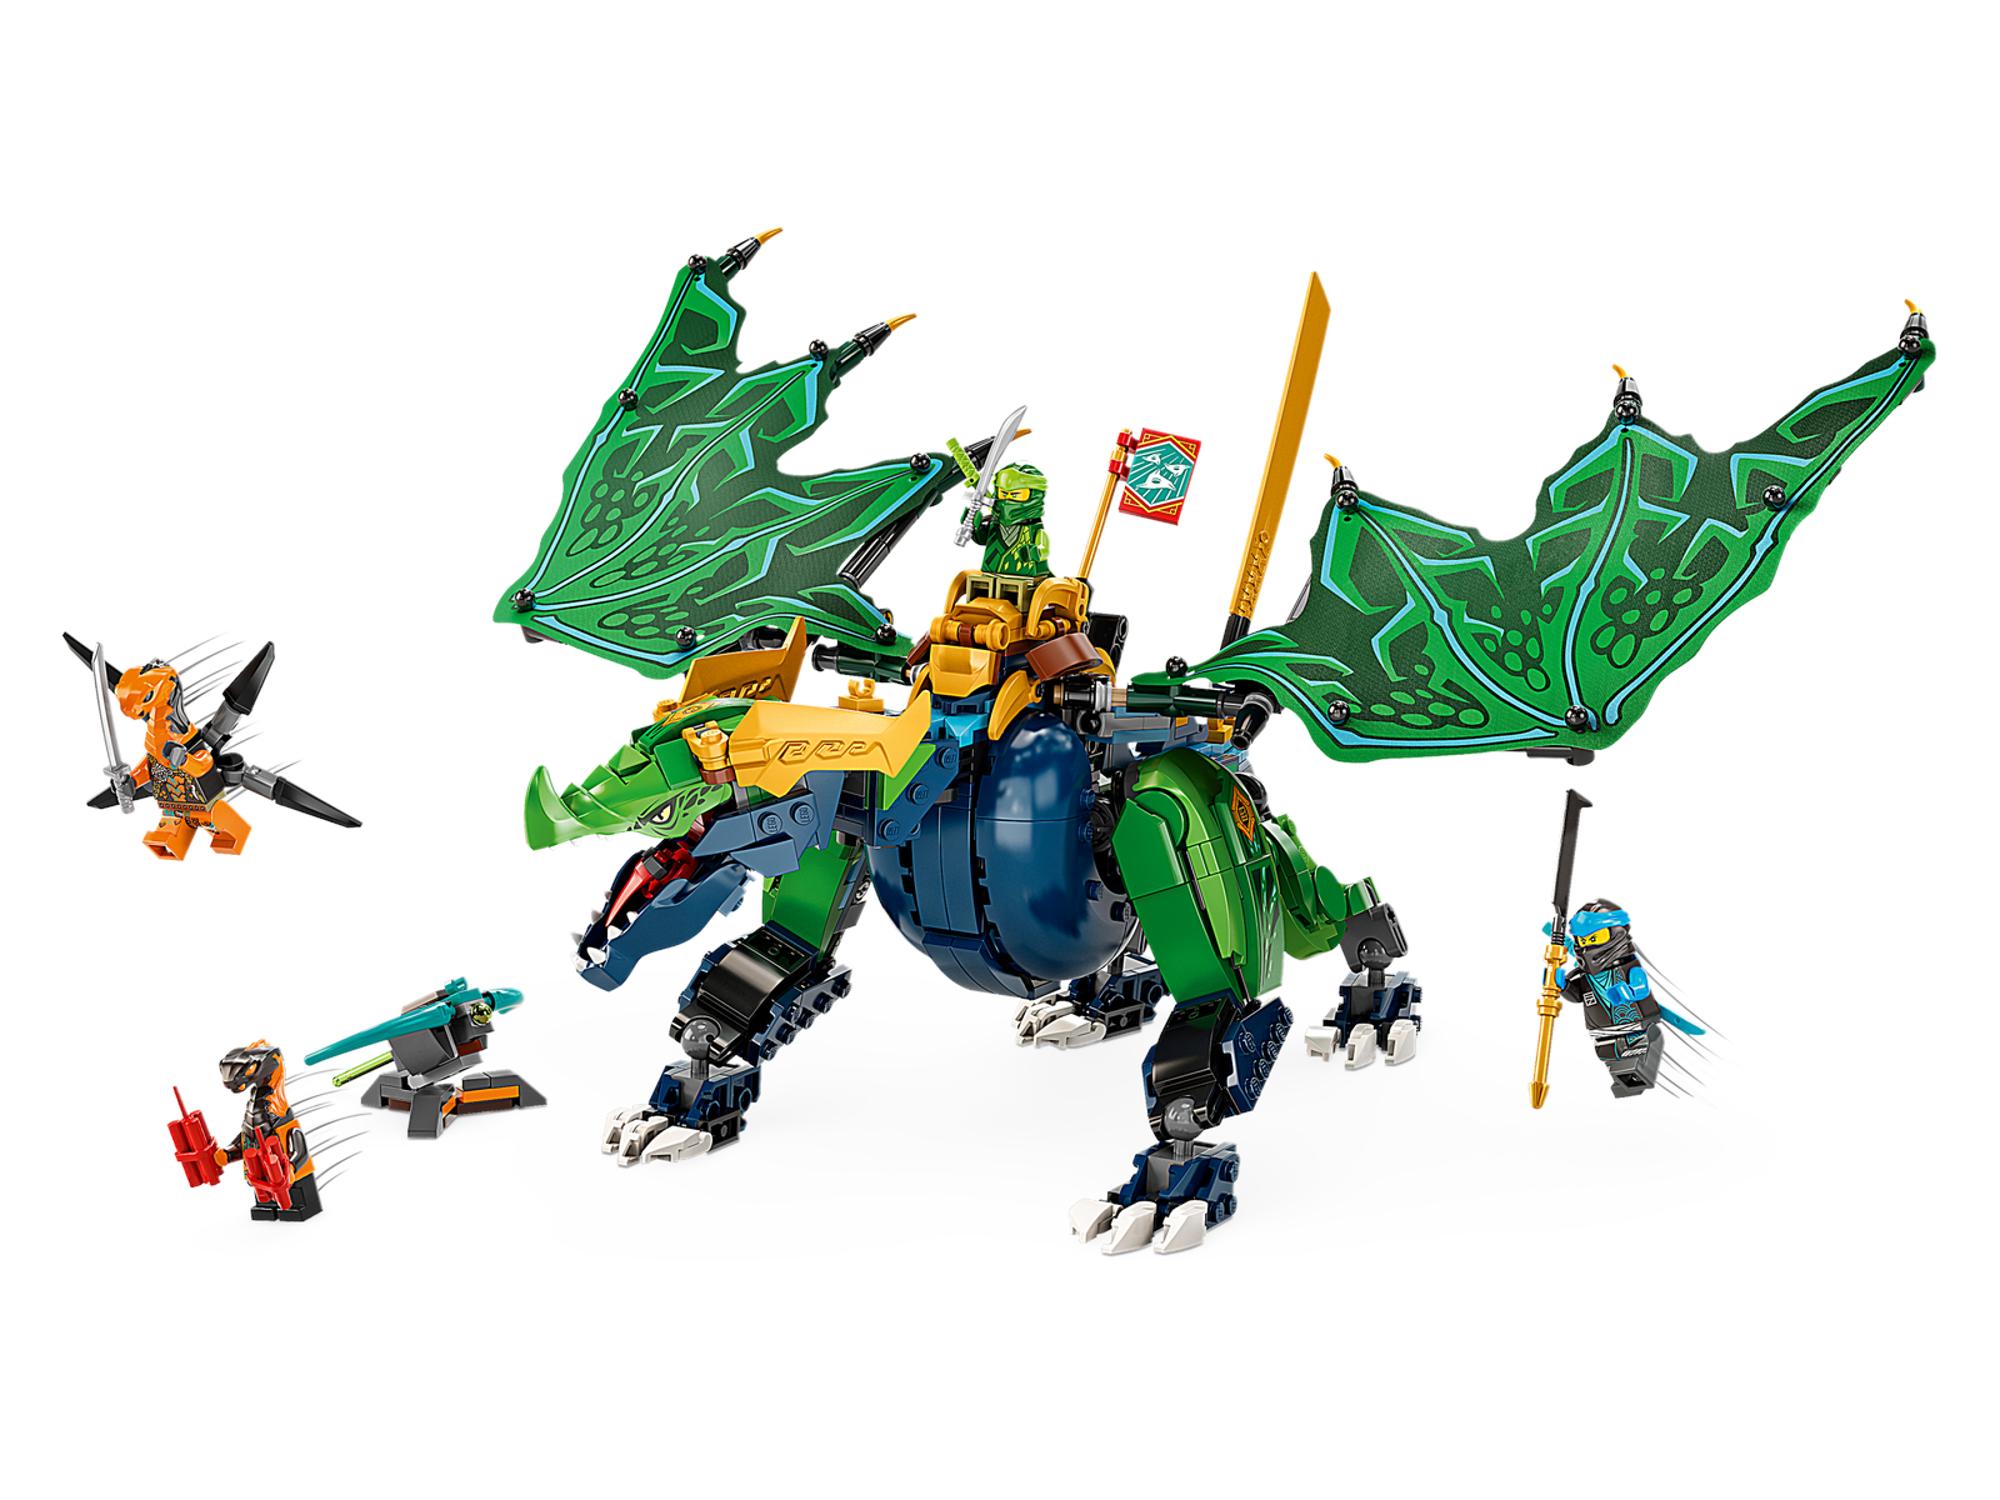 Lego Ninjago - Lloyds Legendary Dragon